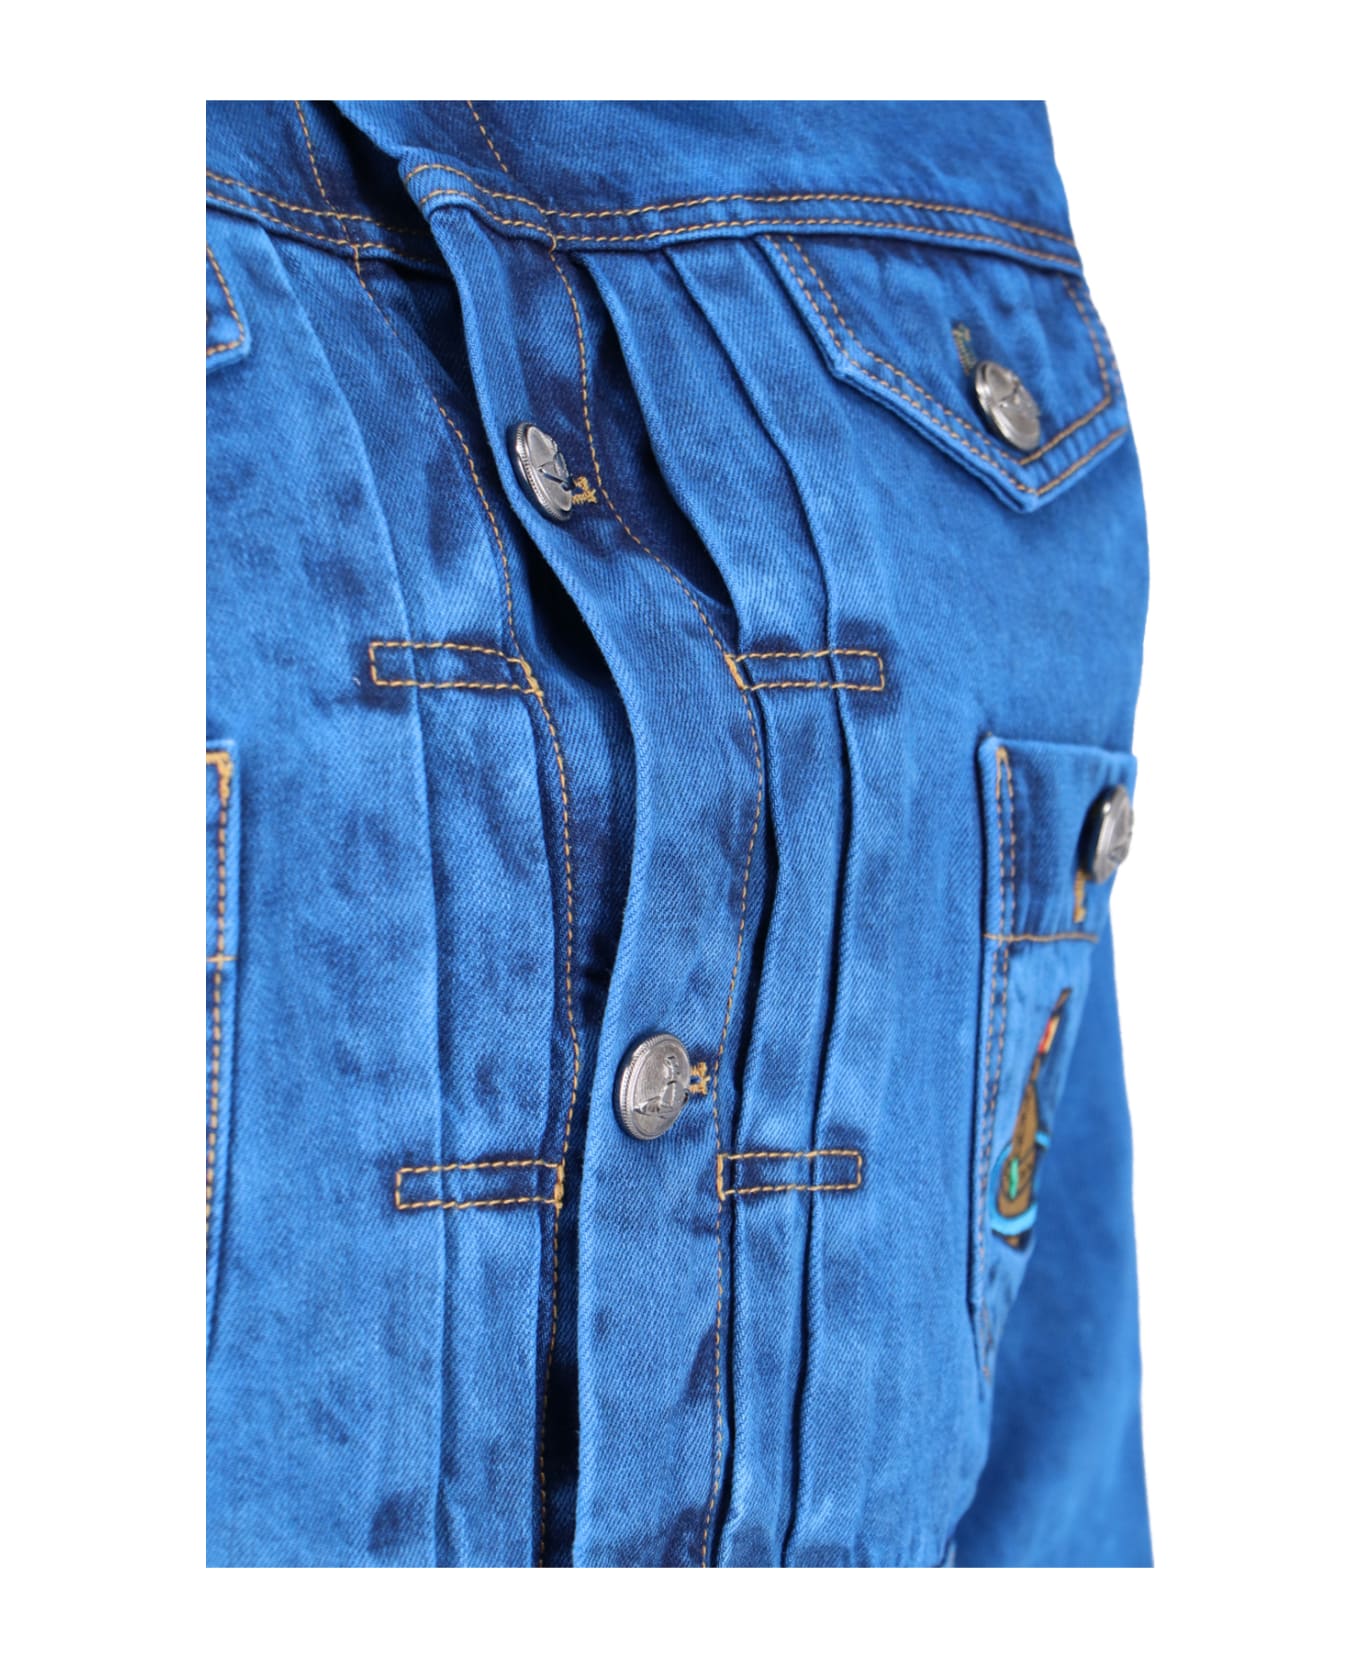 Vivienne Westwood Logo Denim Jacket - Blue ジャケット